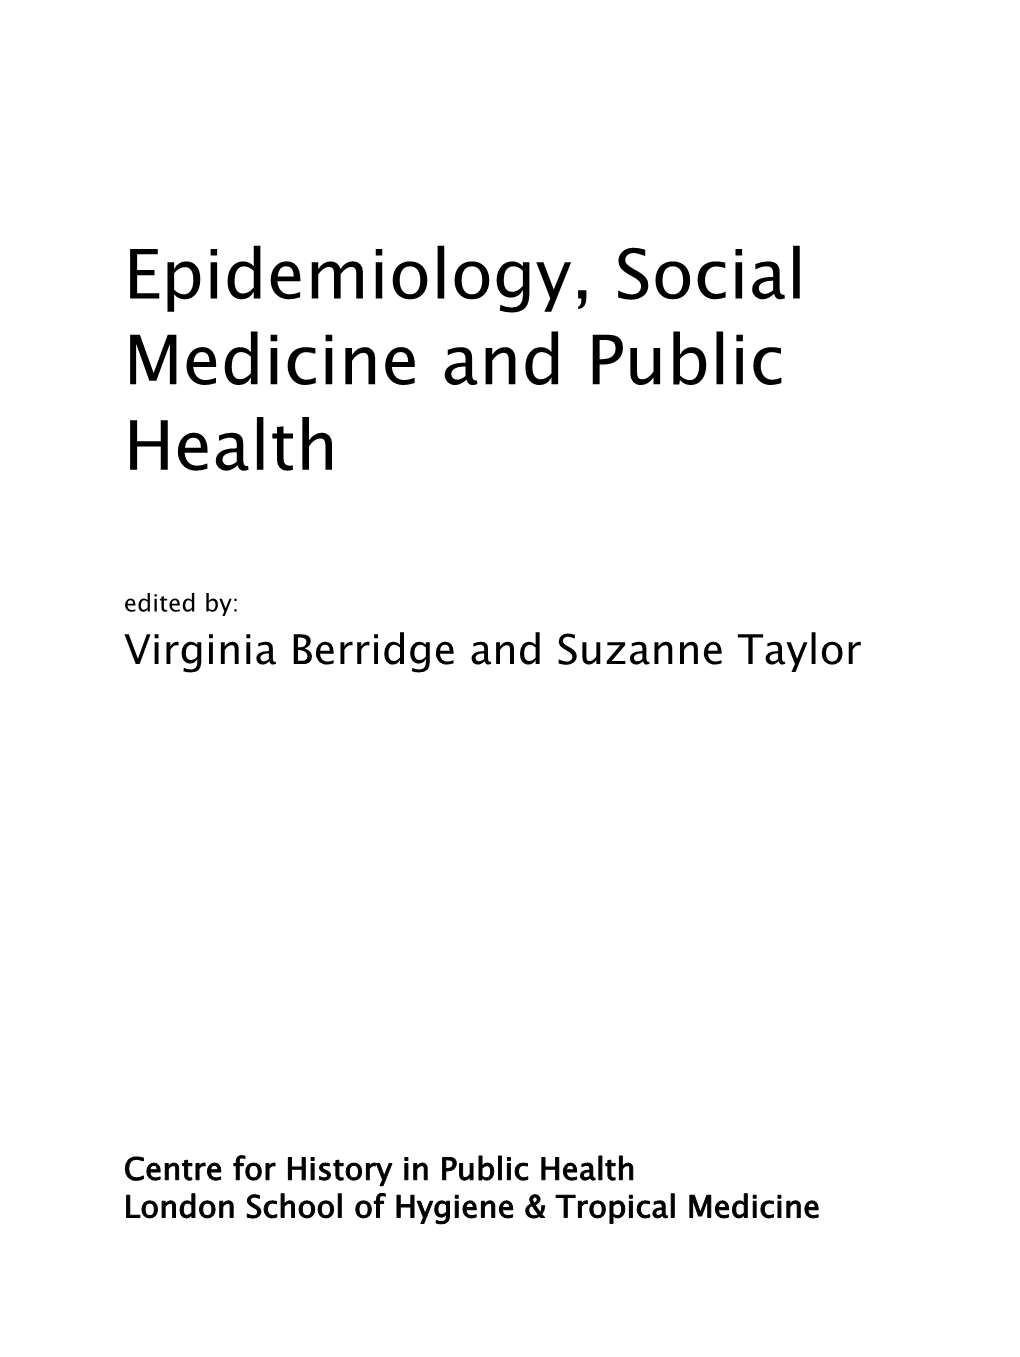 Epidemiology, Social Medicine and Public Health